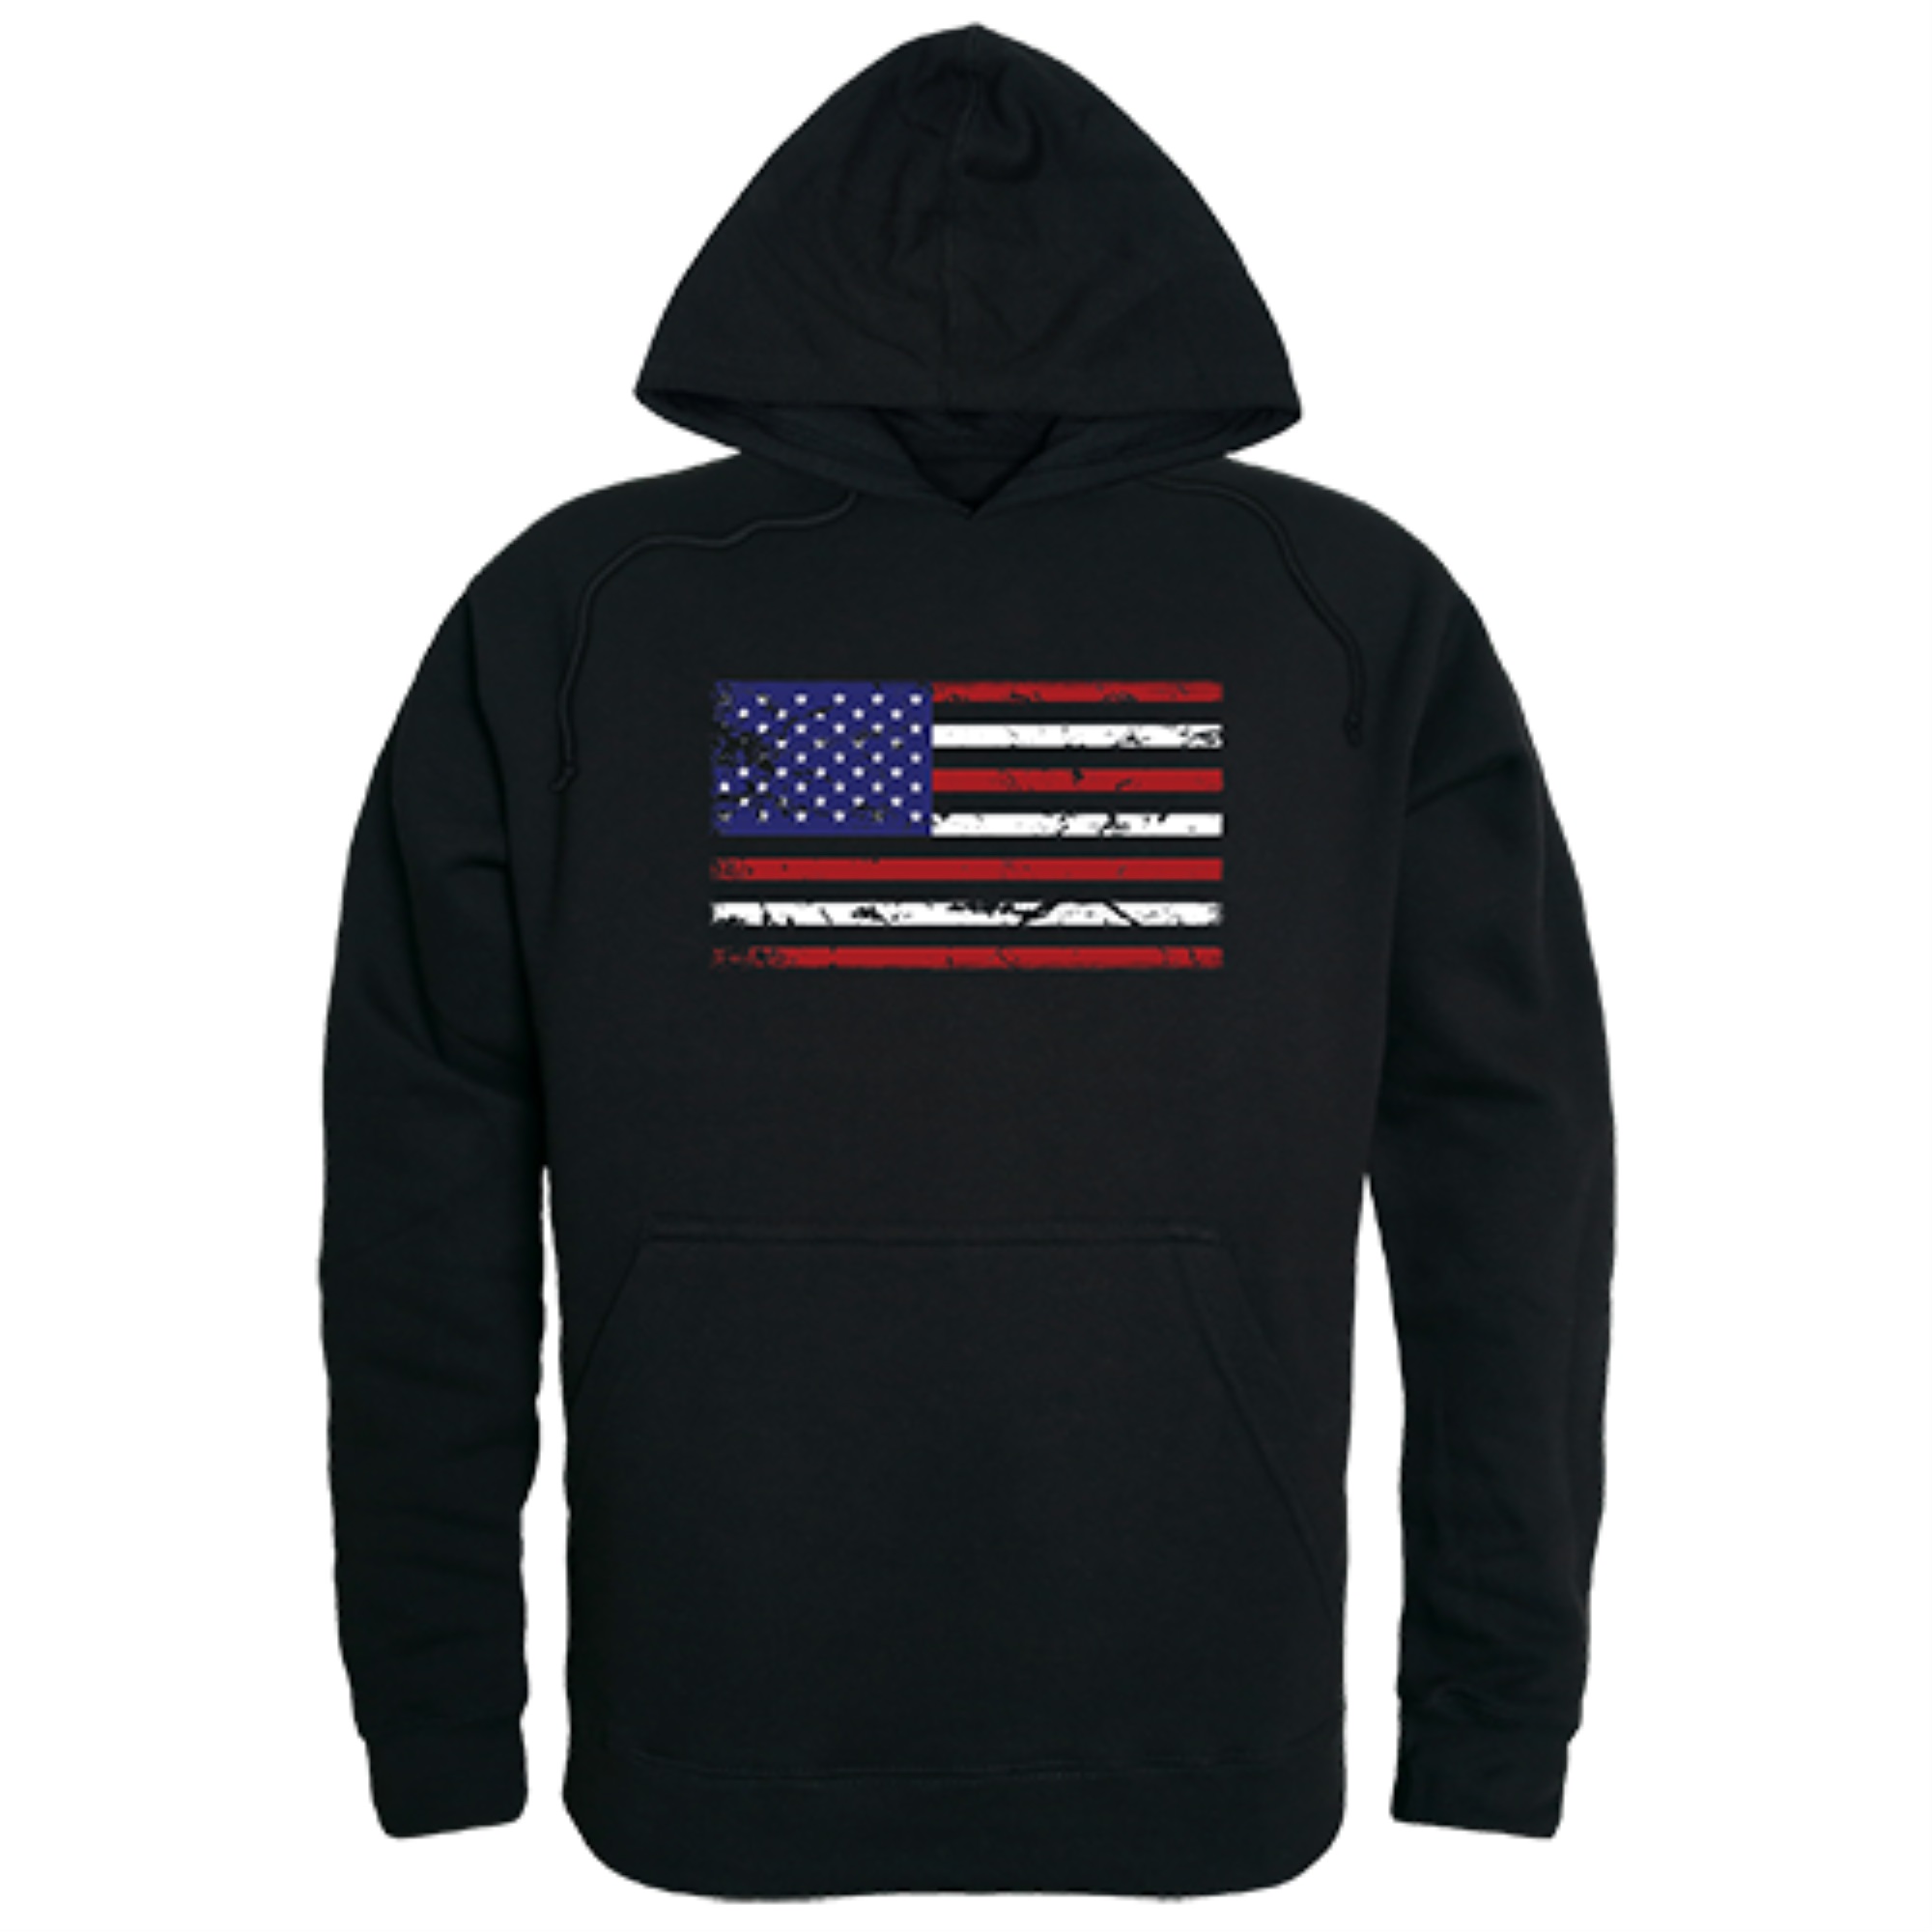 Rapid Dominance Graphic Pullover, US Flag, Black, S